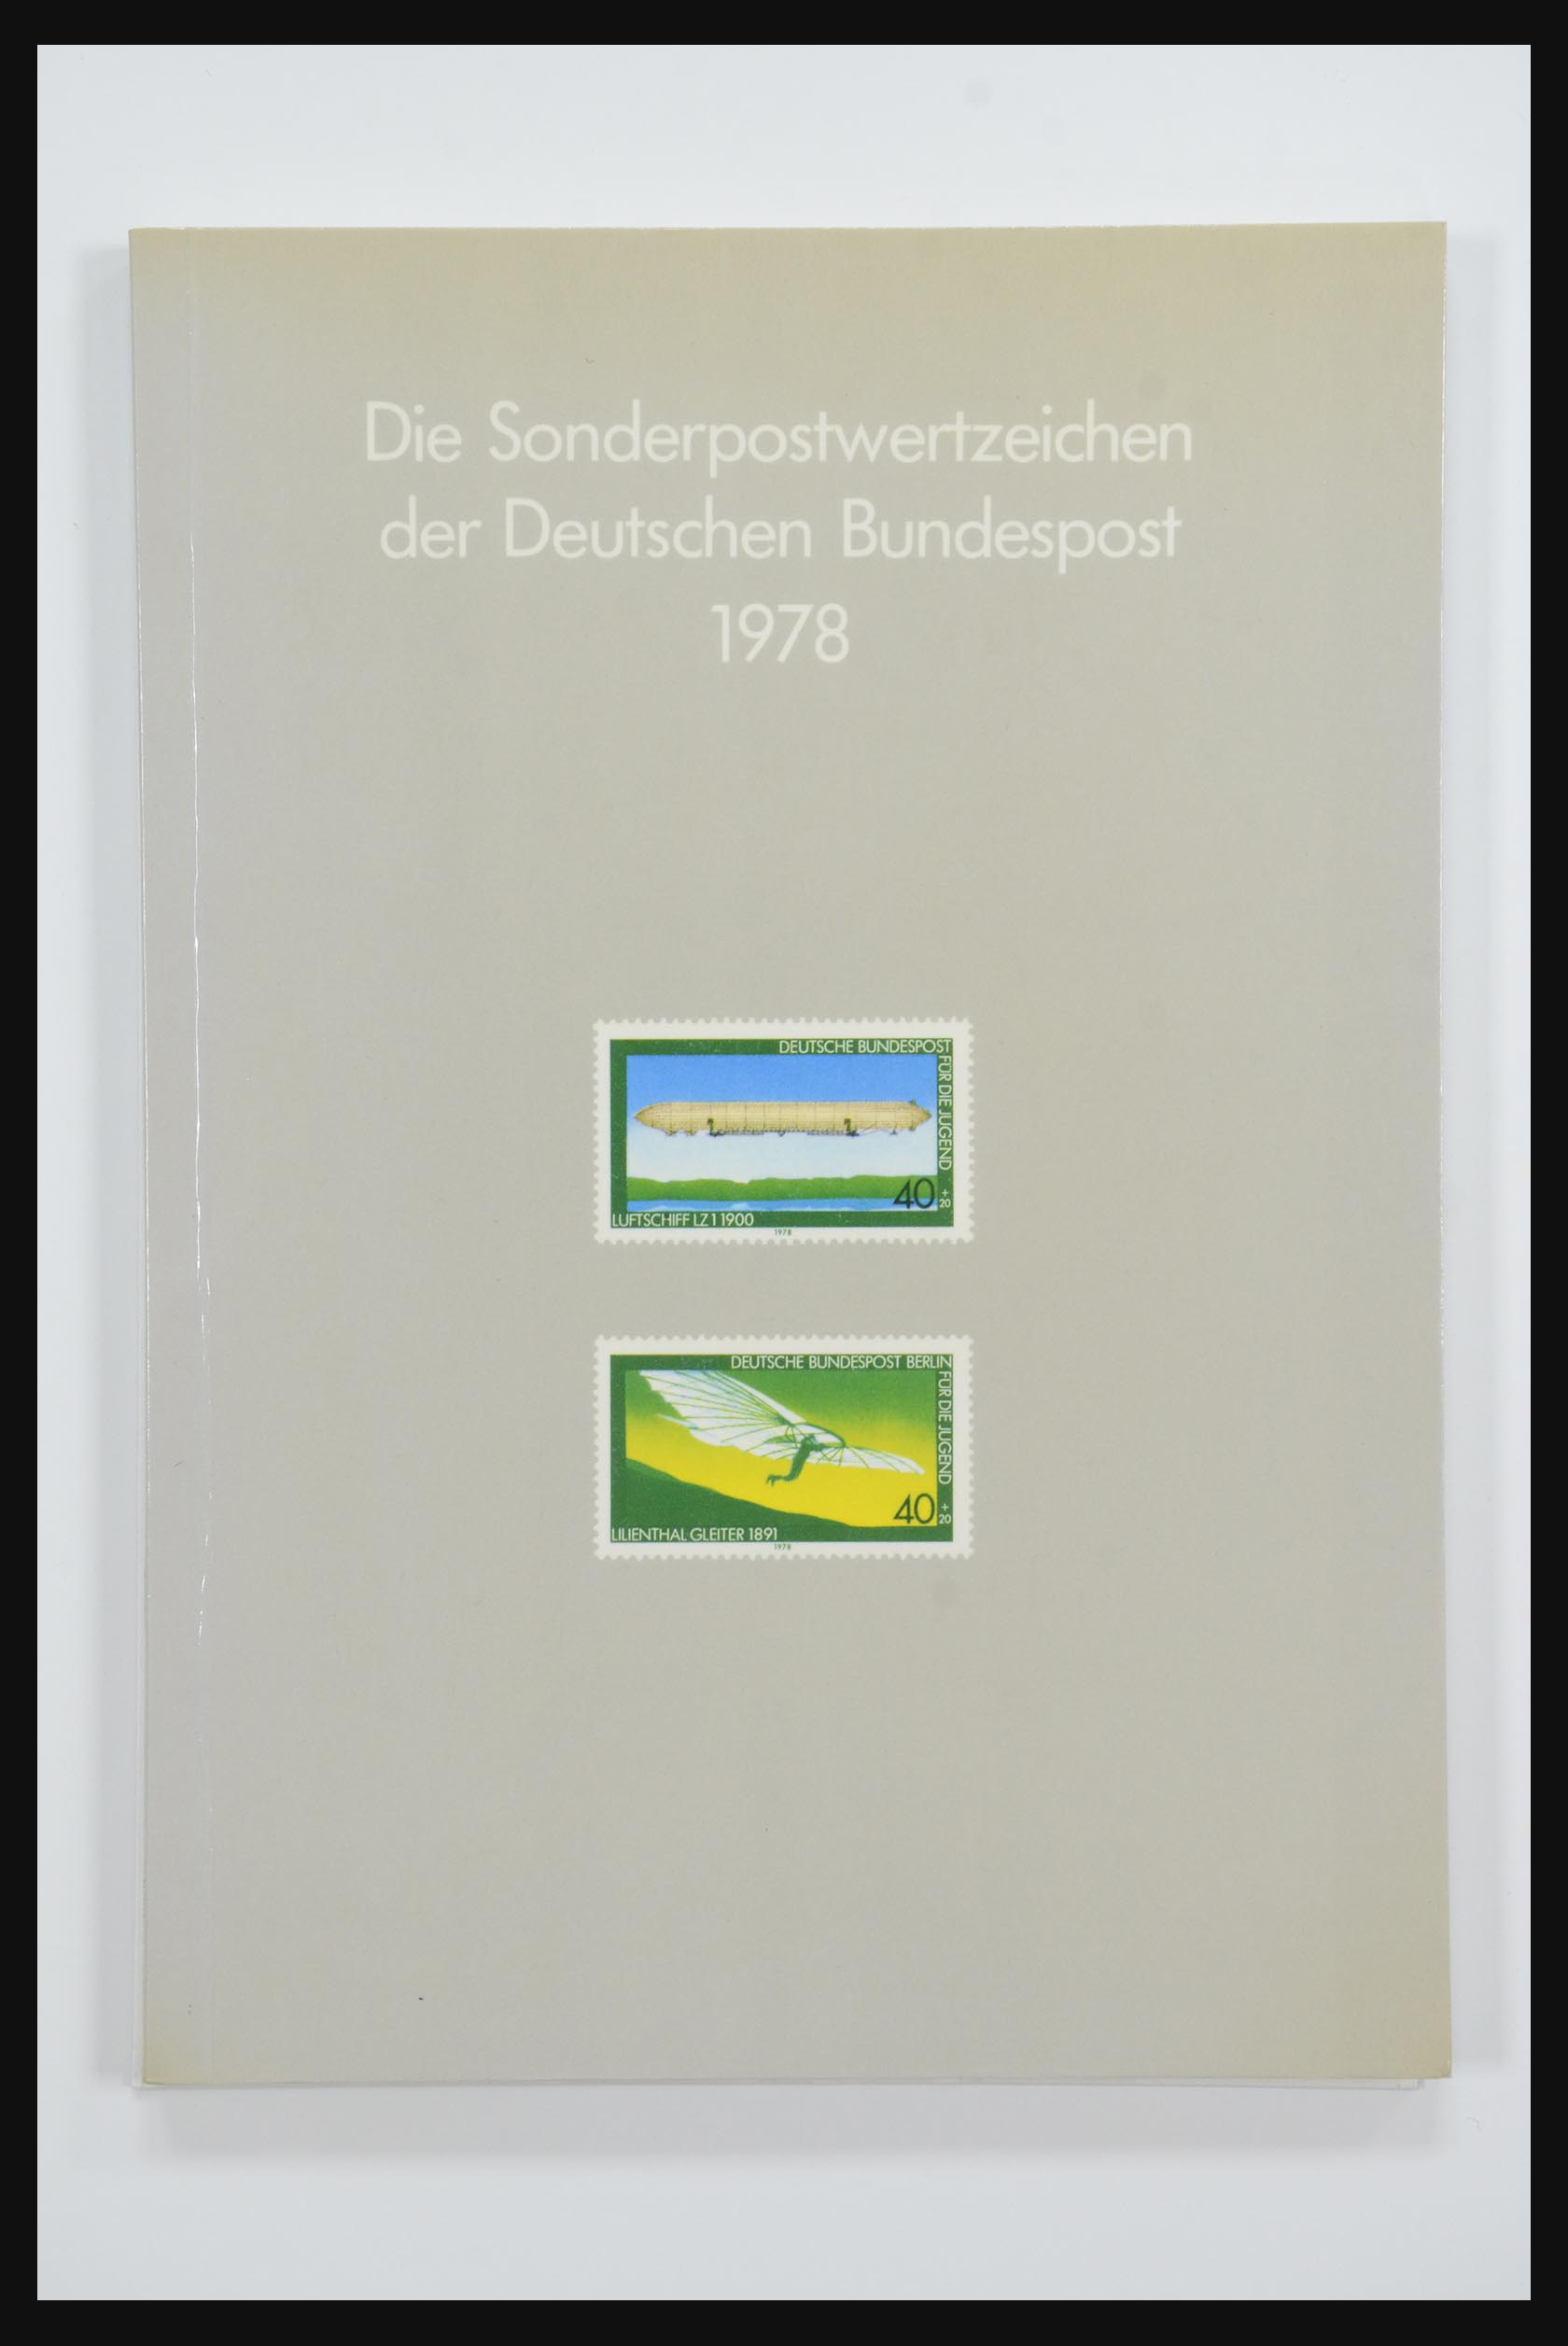 31836 006 - 31836 Bundespost yearbooks 1974-1999.